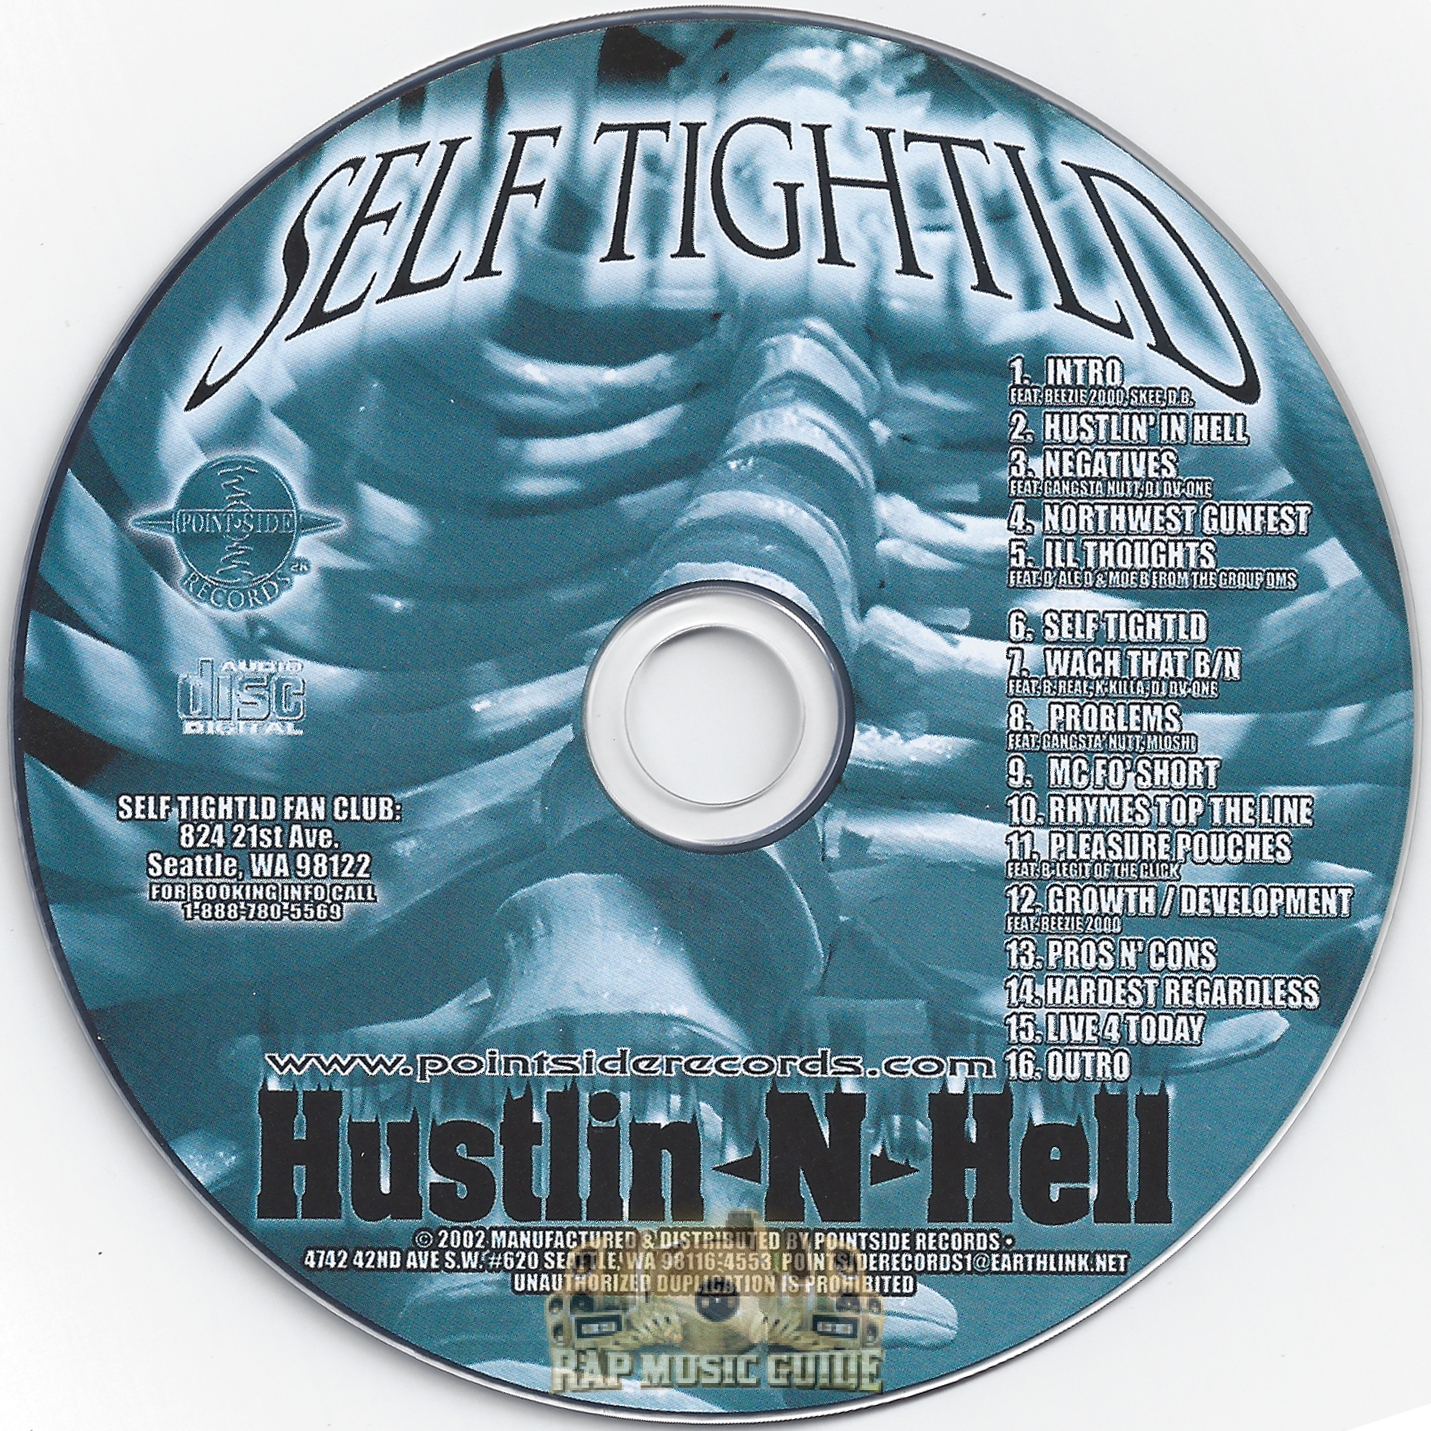 Self Tightld - Hustlin-N-Hell: Re-Release. CD | Rap Music Guide